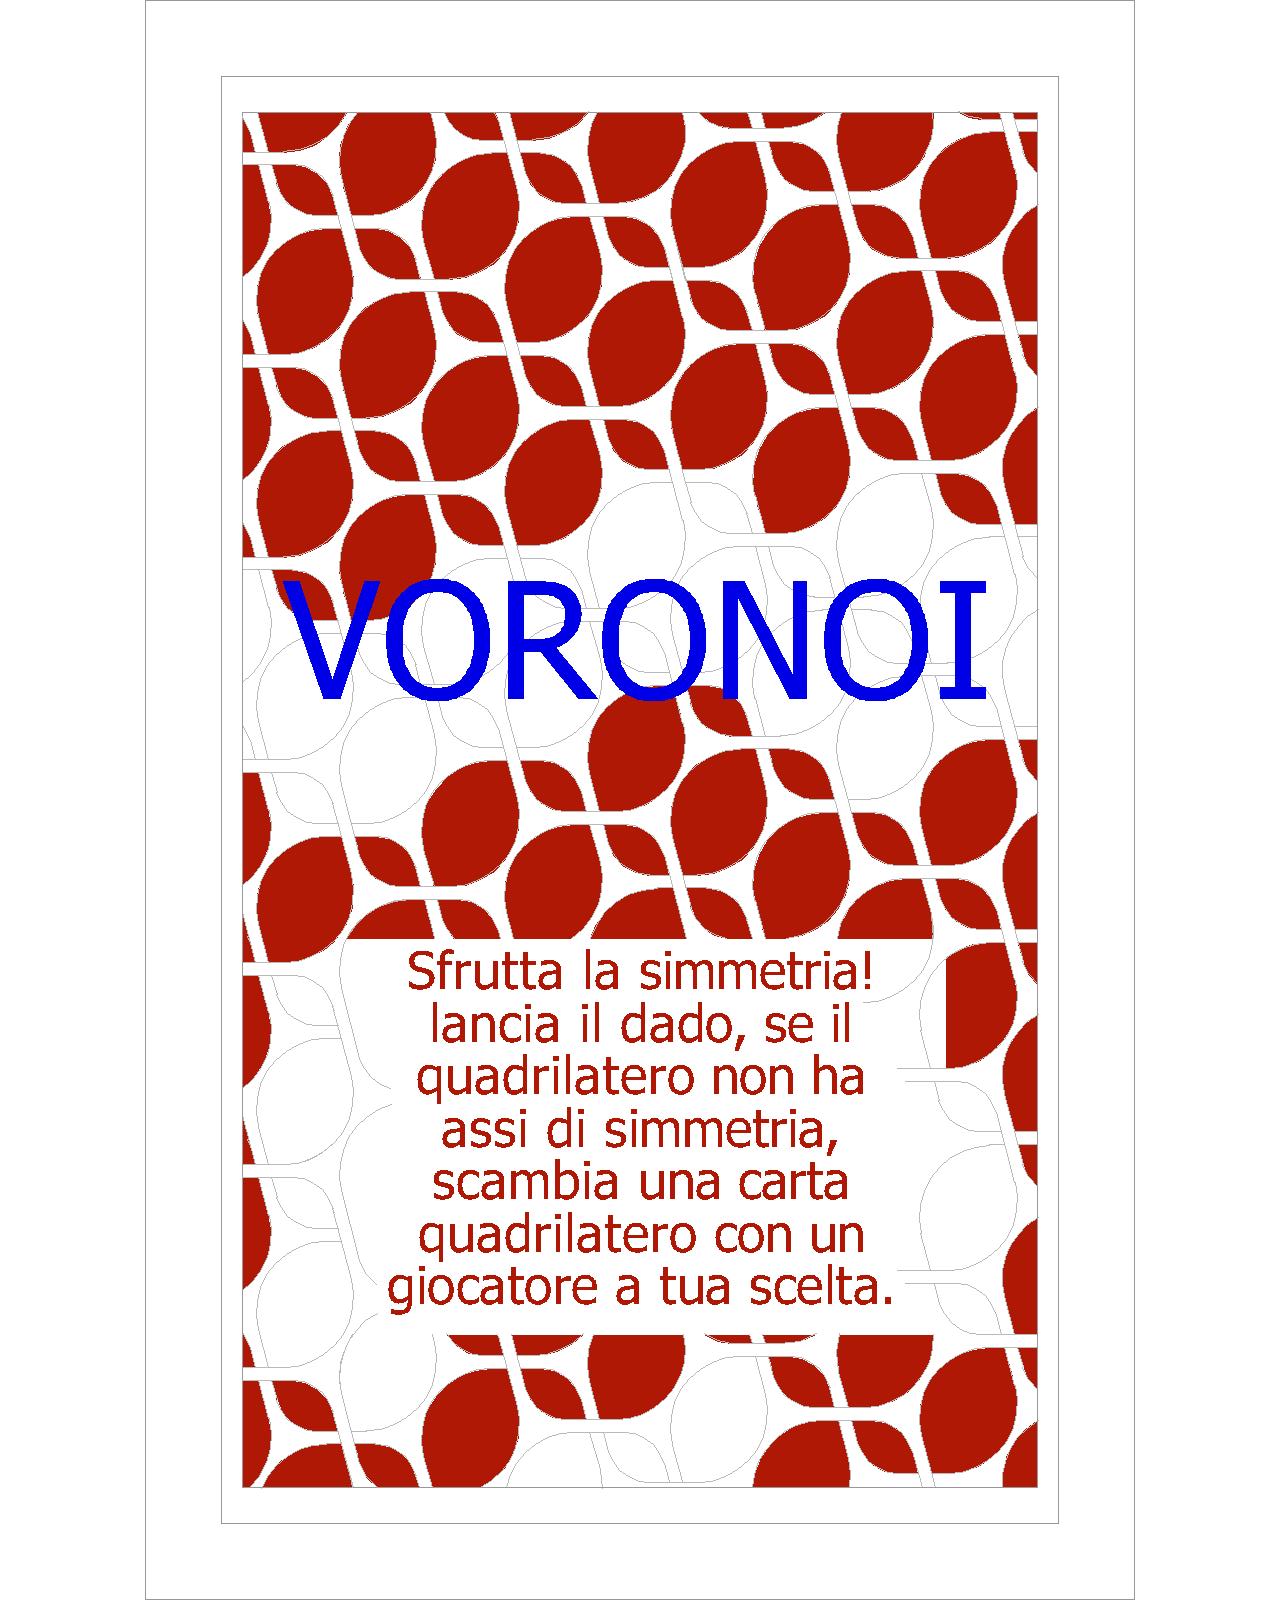 018. VORONOI b-Model (Coach M.C. Petroli)